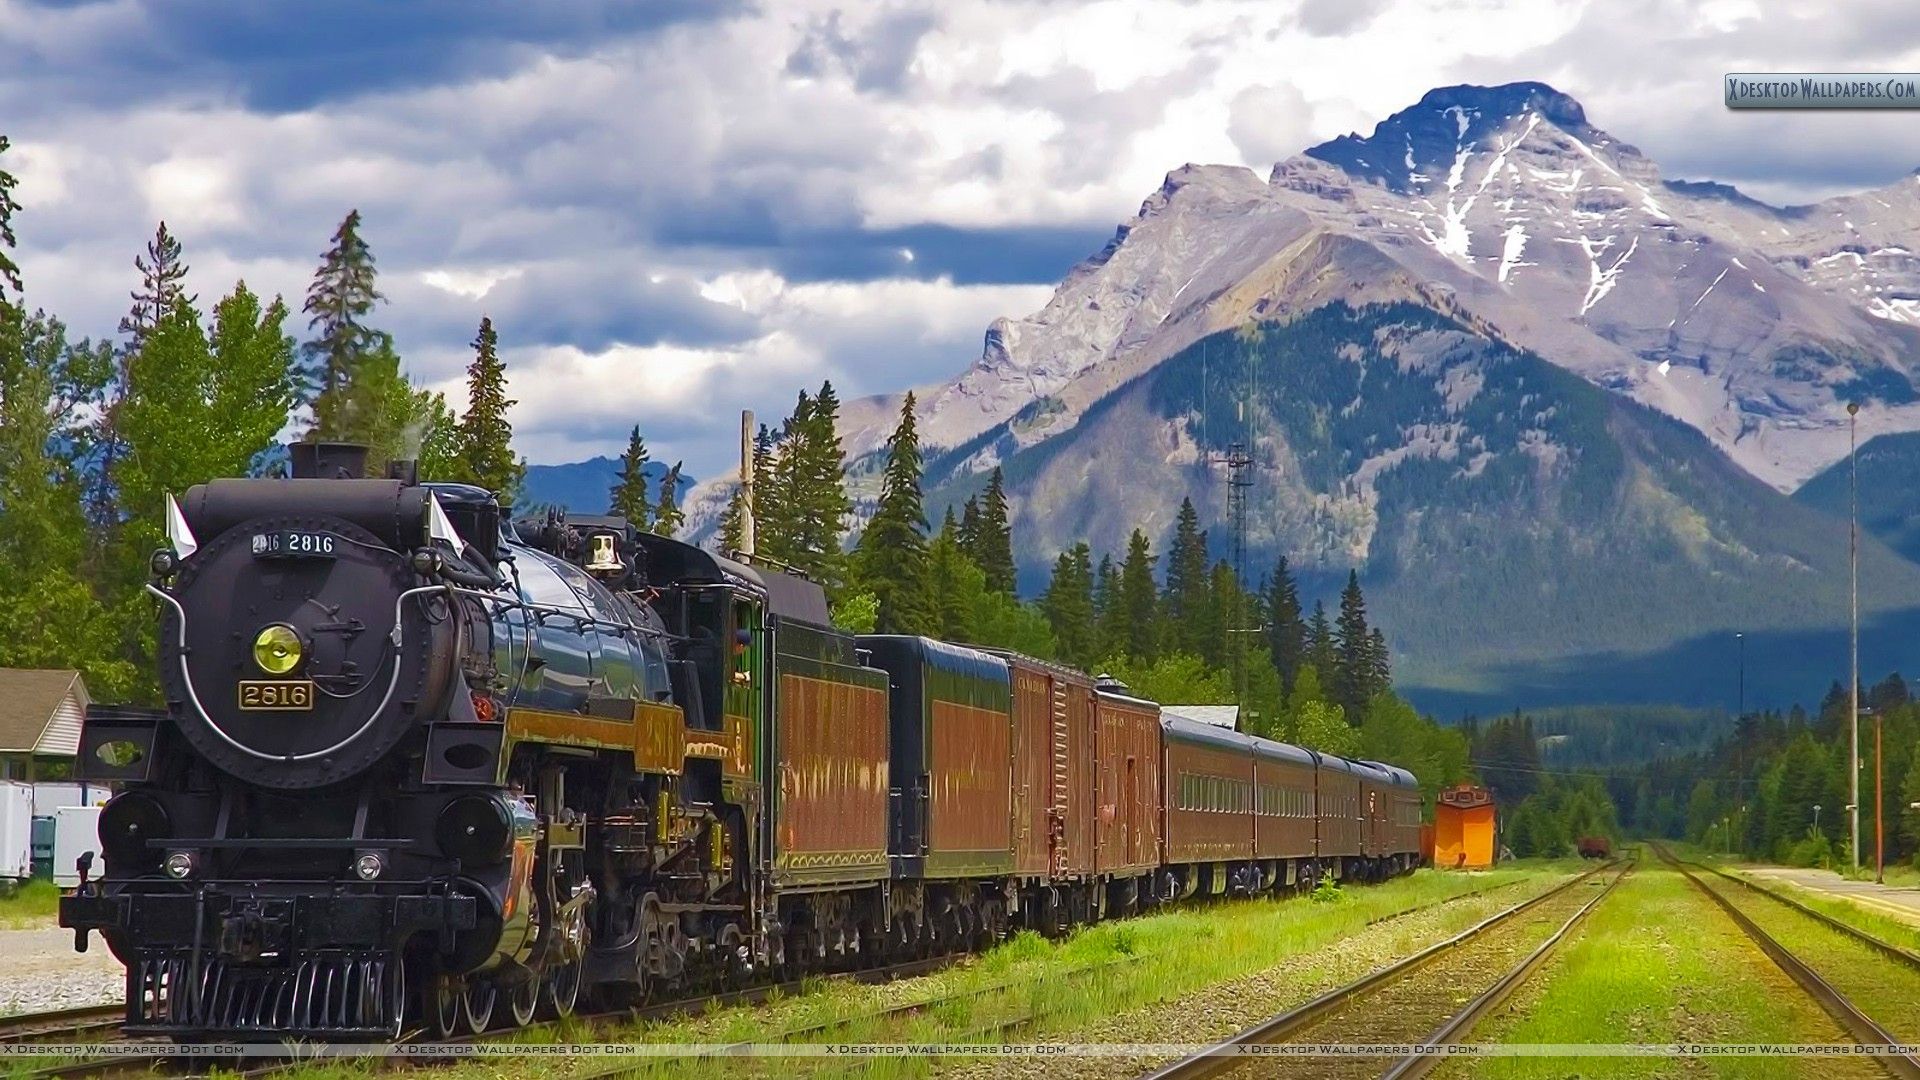 Free download Train Station Banff National Park Alberta Wallpaper